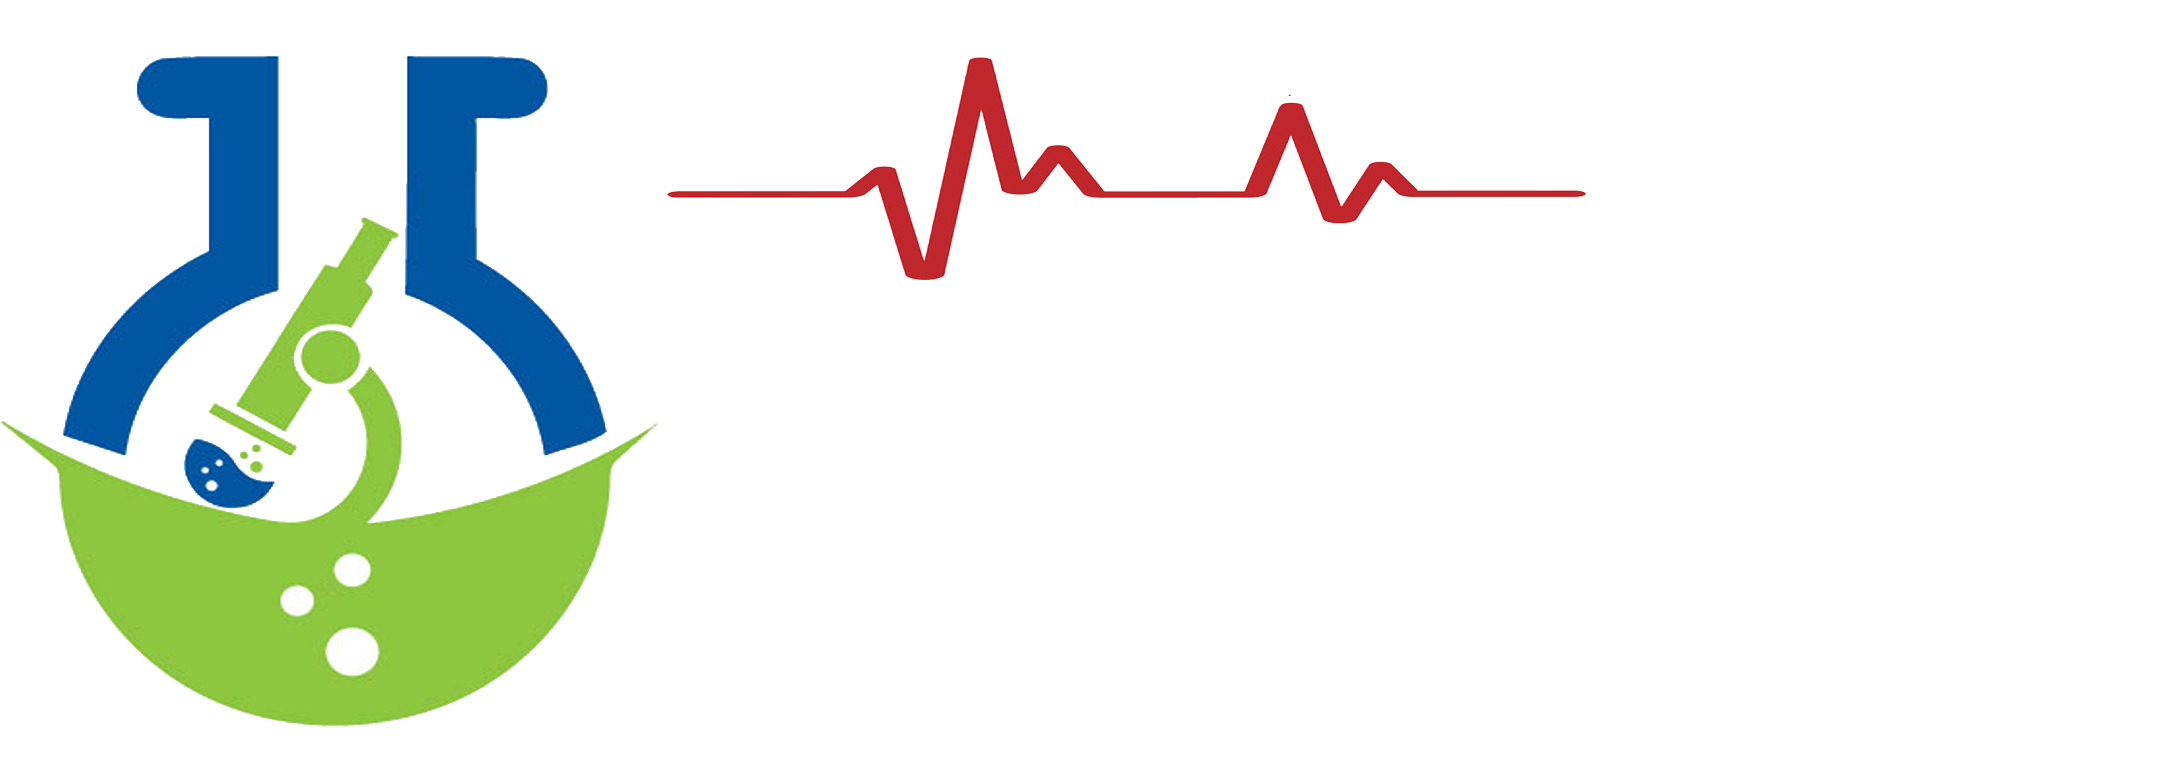 Viccorp Laboratory Inc.